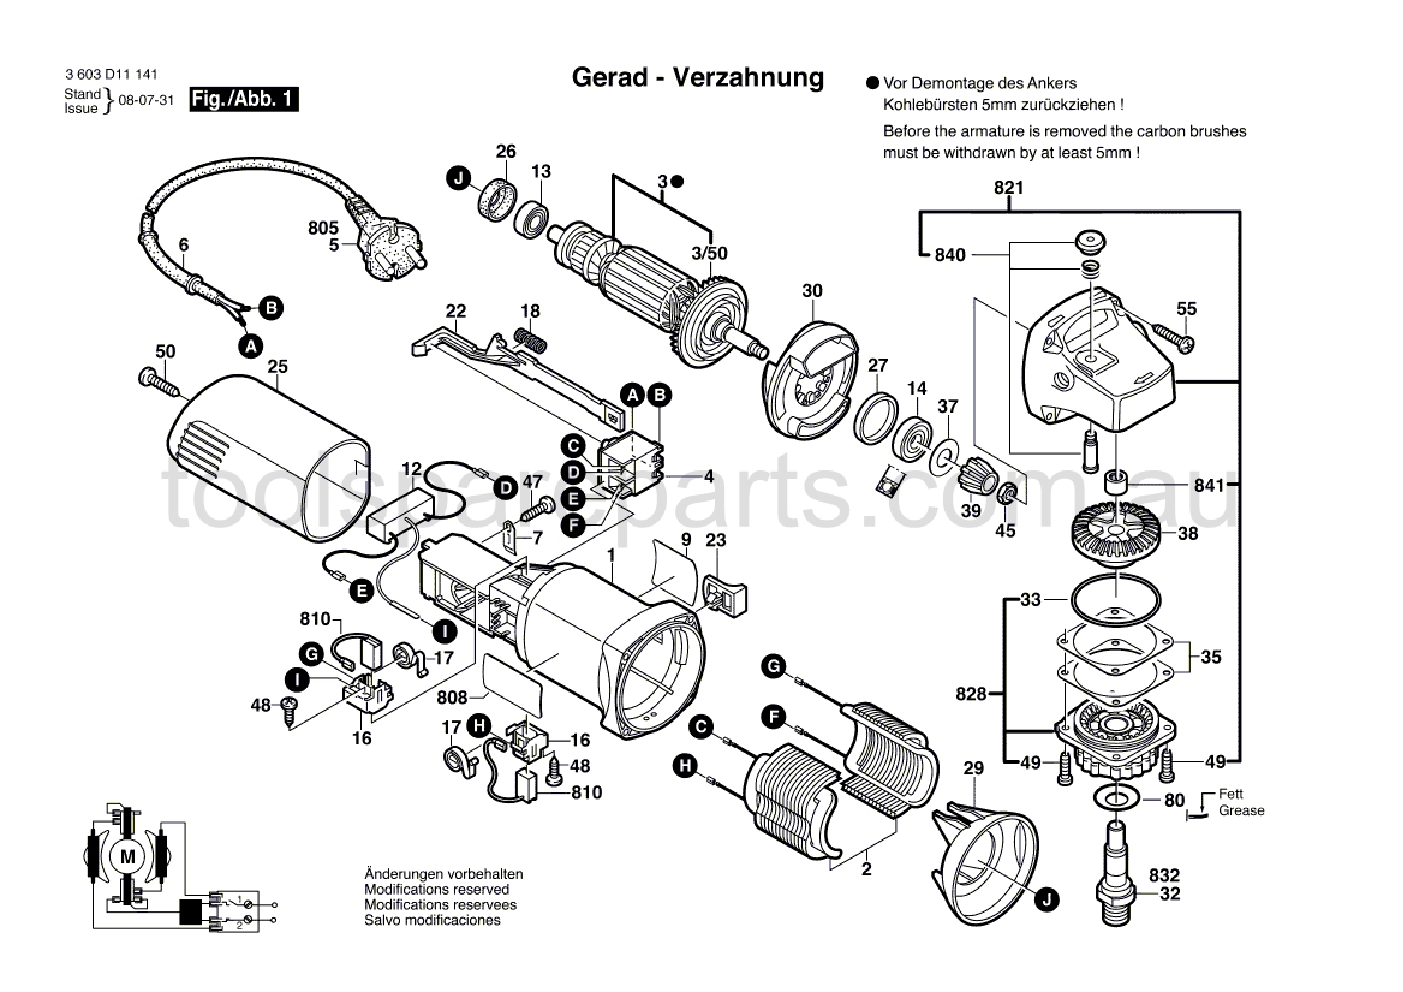 Bosch PWS 1500 3603D11141  Diagram 1